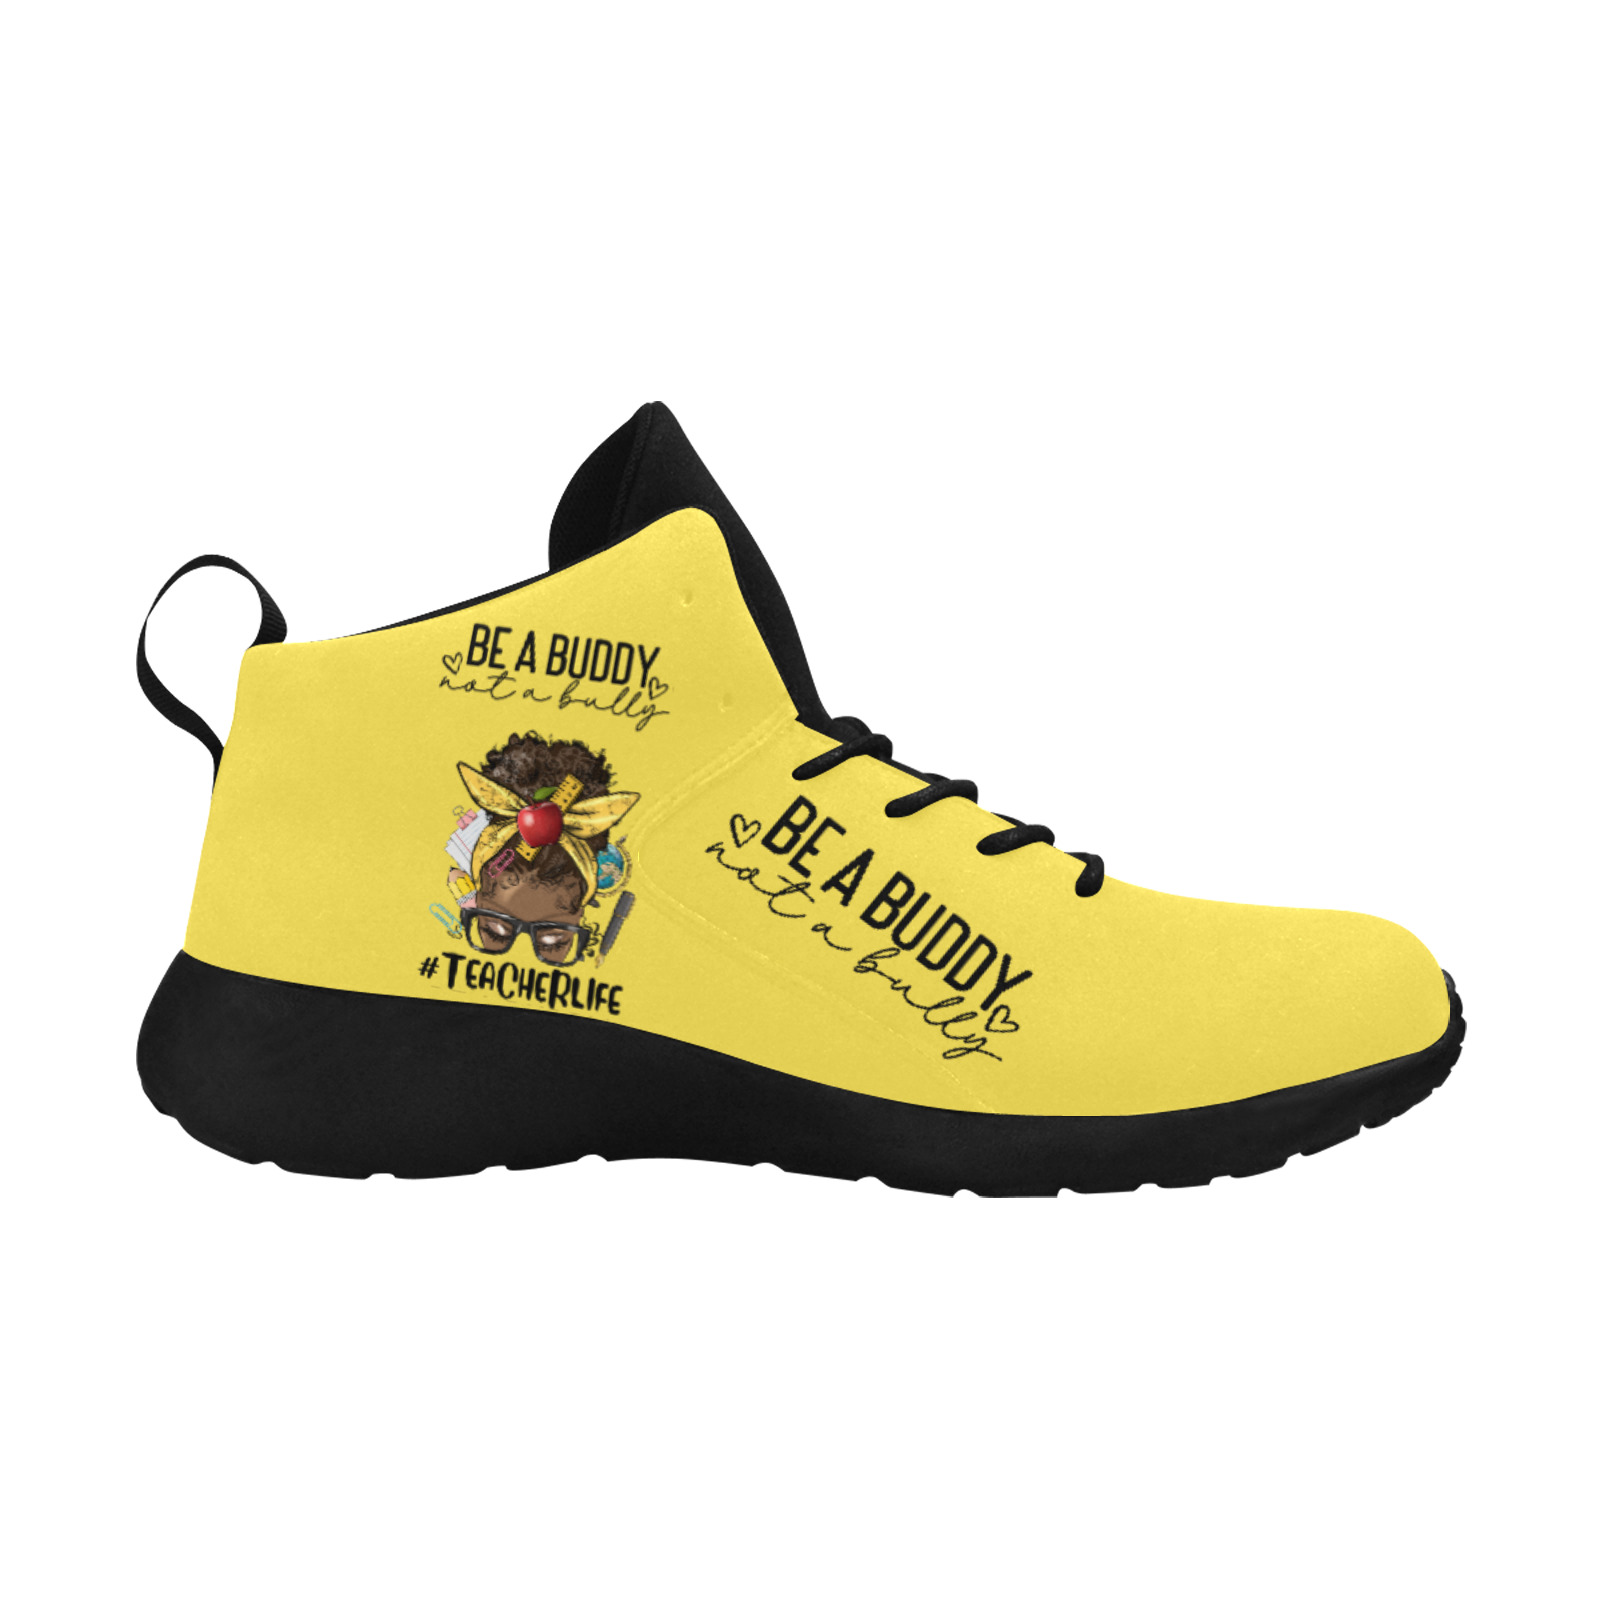 Be-a-buddy-not-a-bullyDkYellowShoe Women's Chukka Training Shoes (Model 57502)